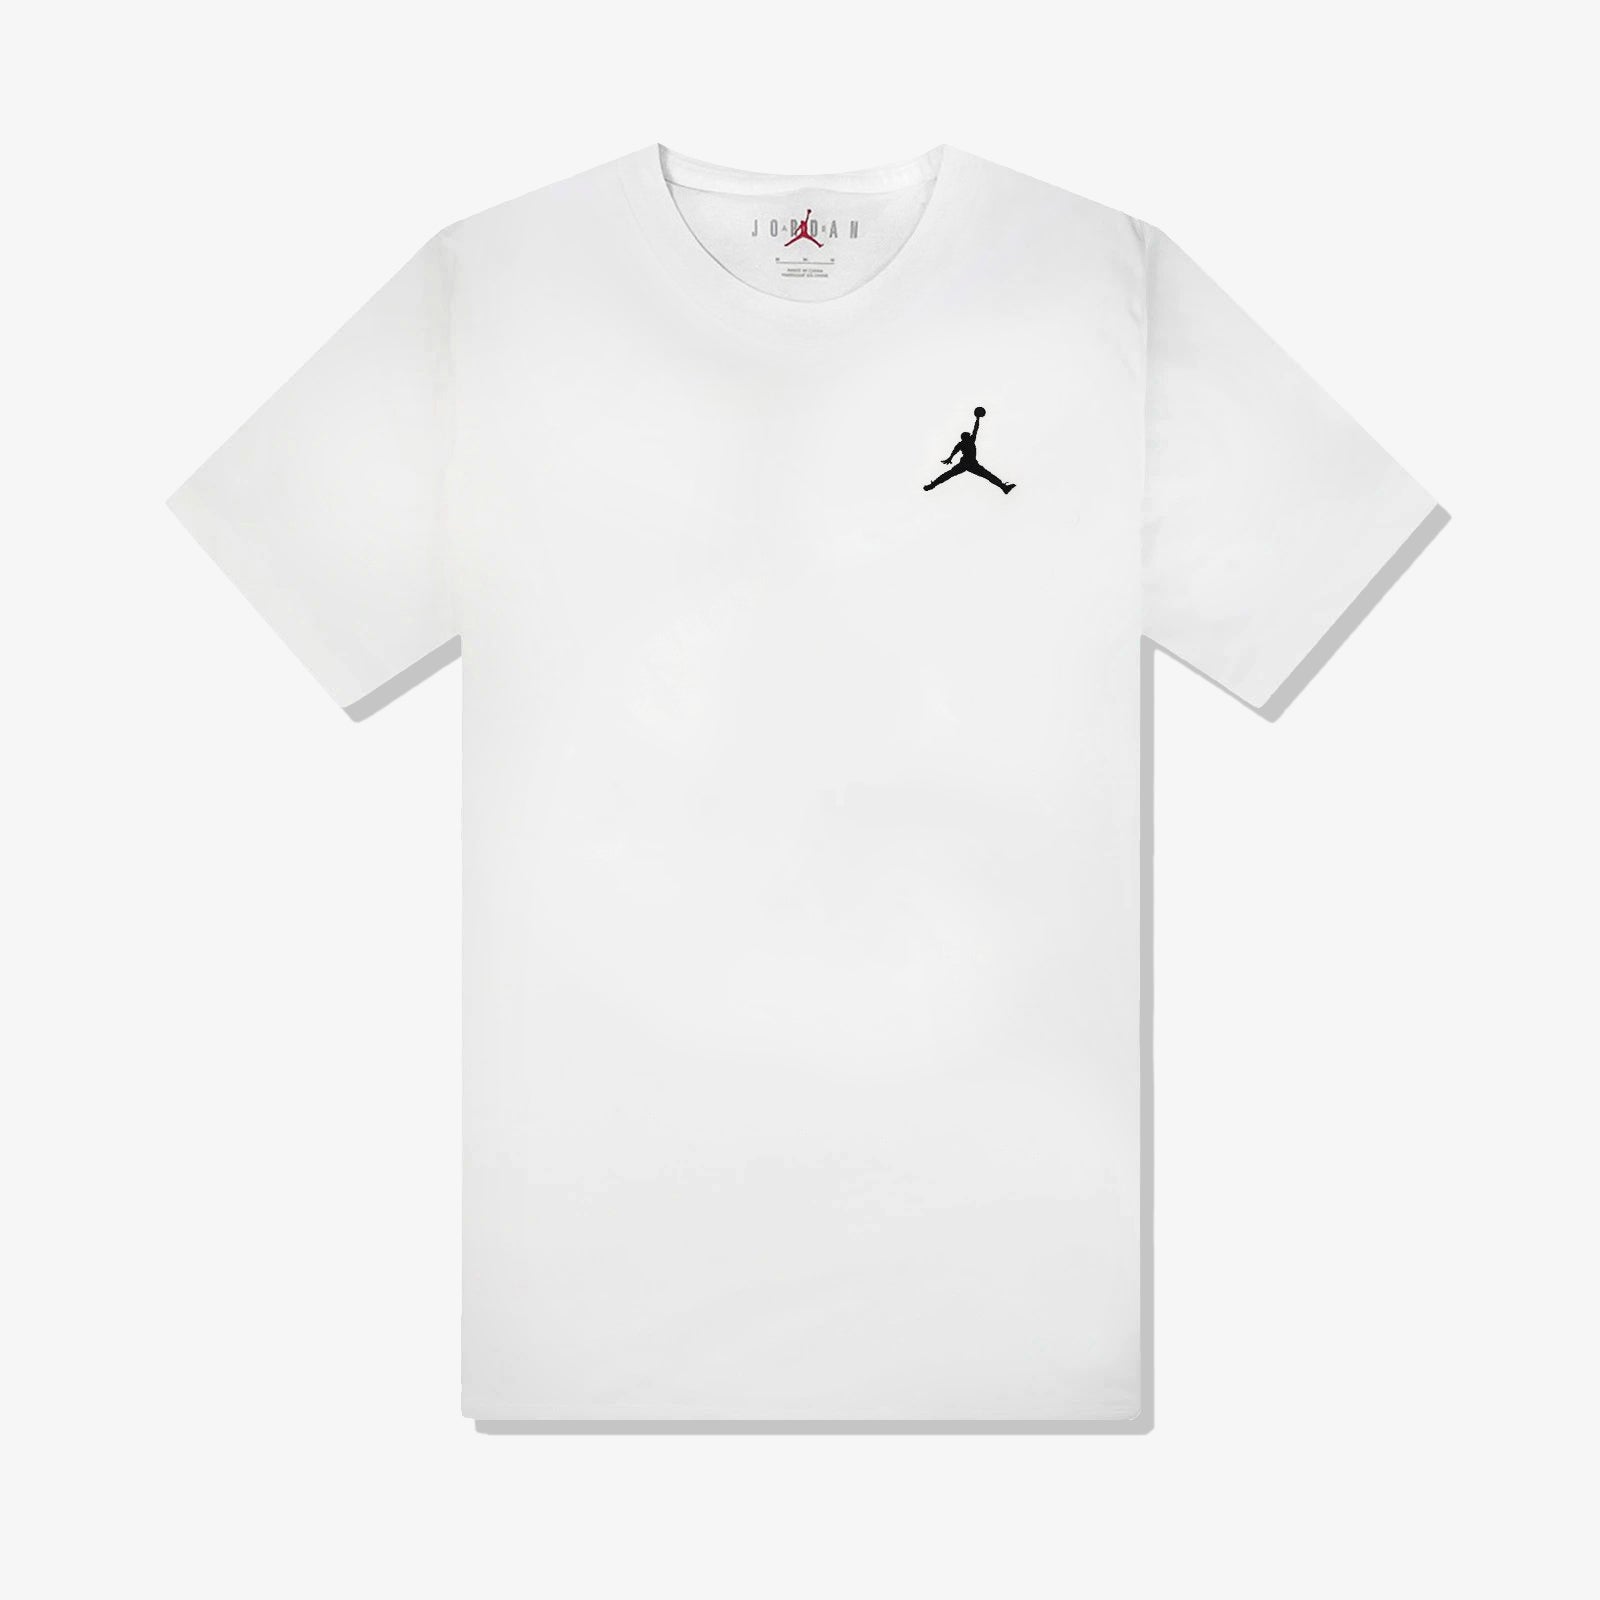 Jordan Jumpman mini logo t-shirt in black